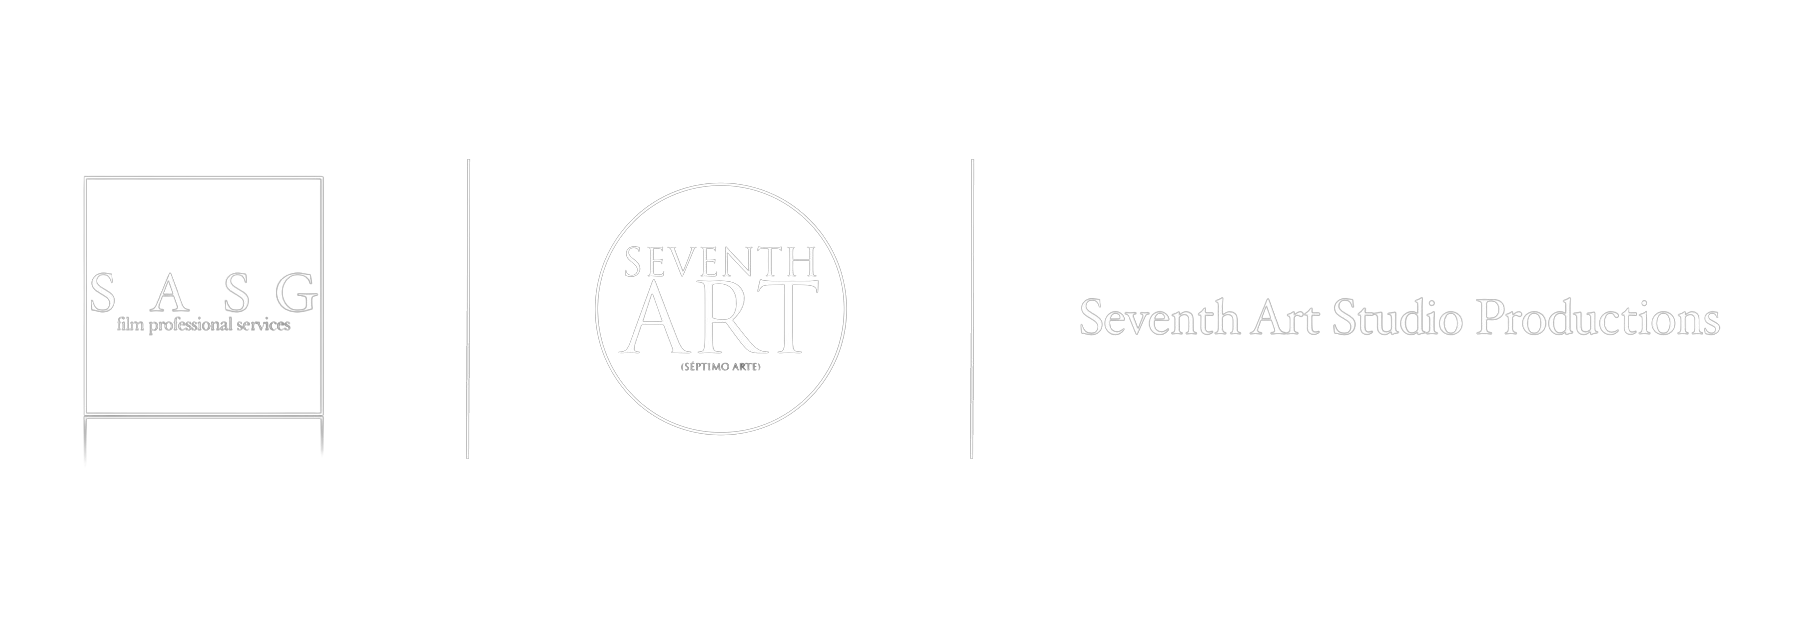 Seventh Art Studio